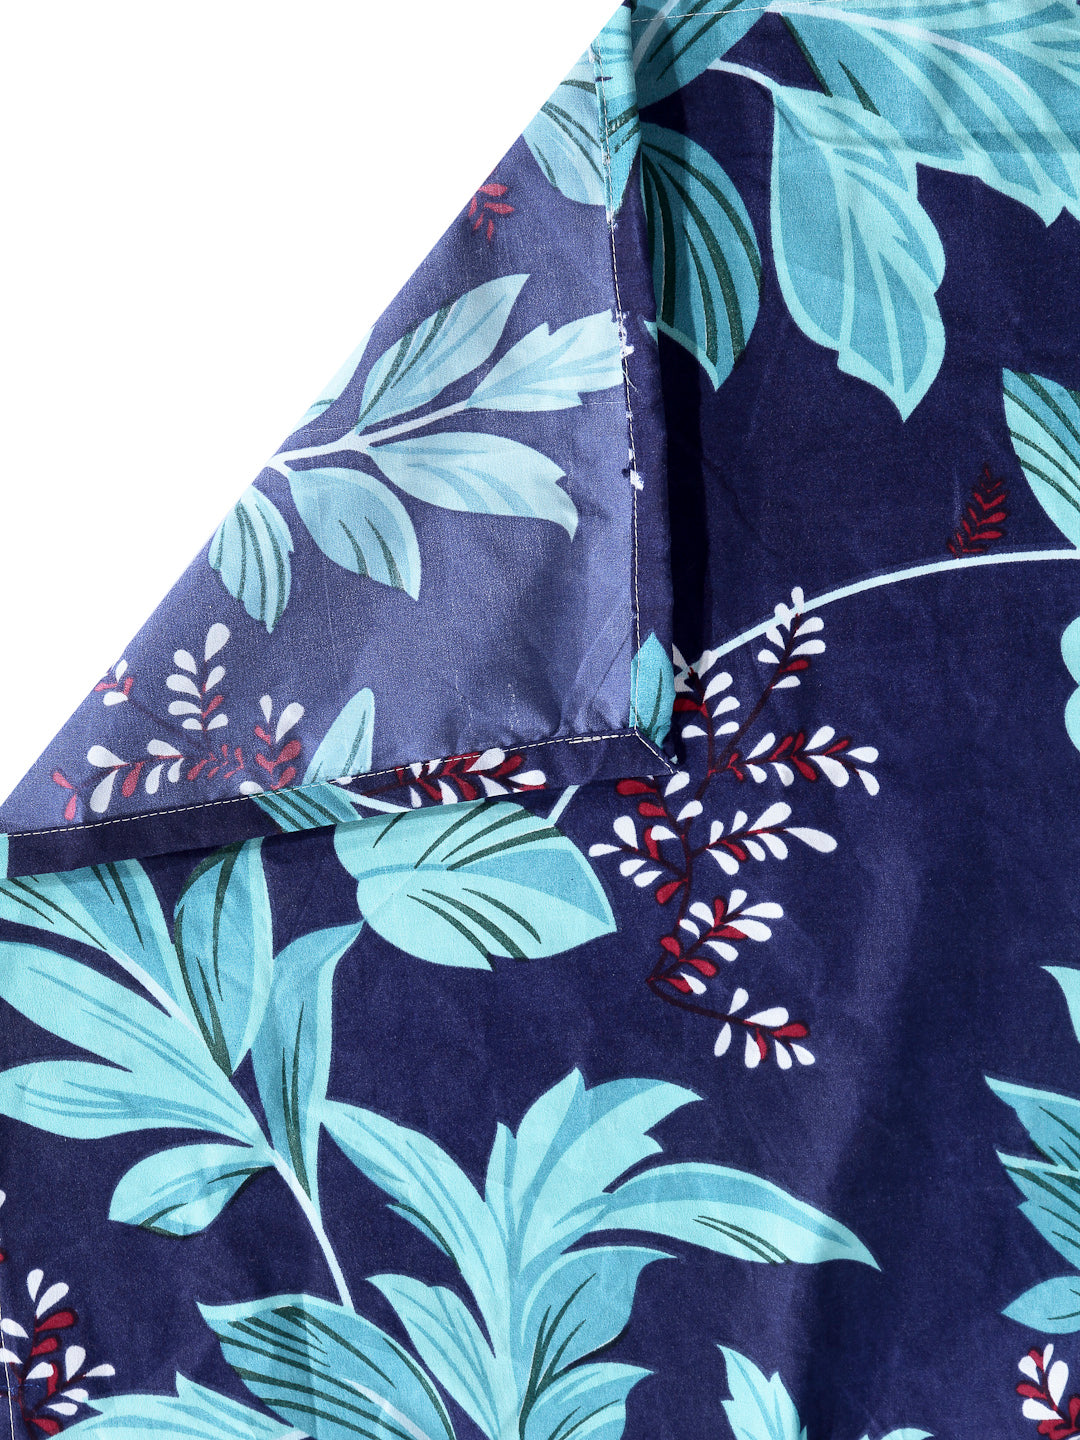 Arrabi Blue Leaf TC Cotton Blend Double Size Bedsheet with 2 Pillow Cover